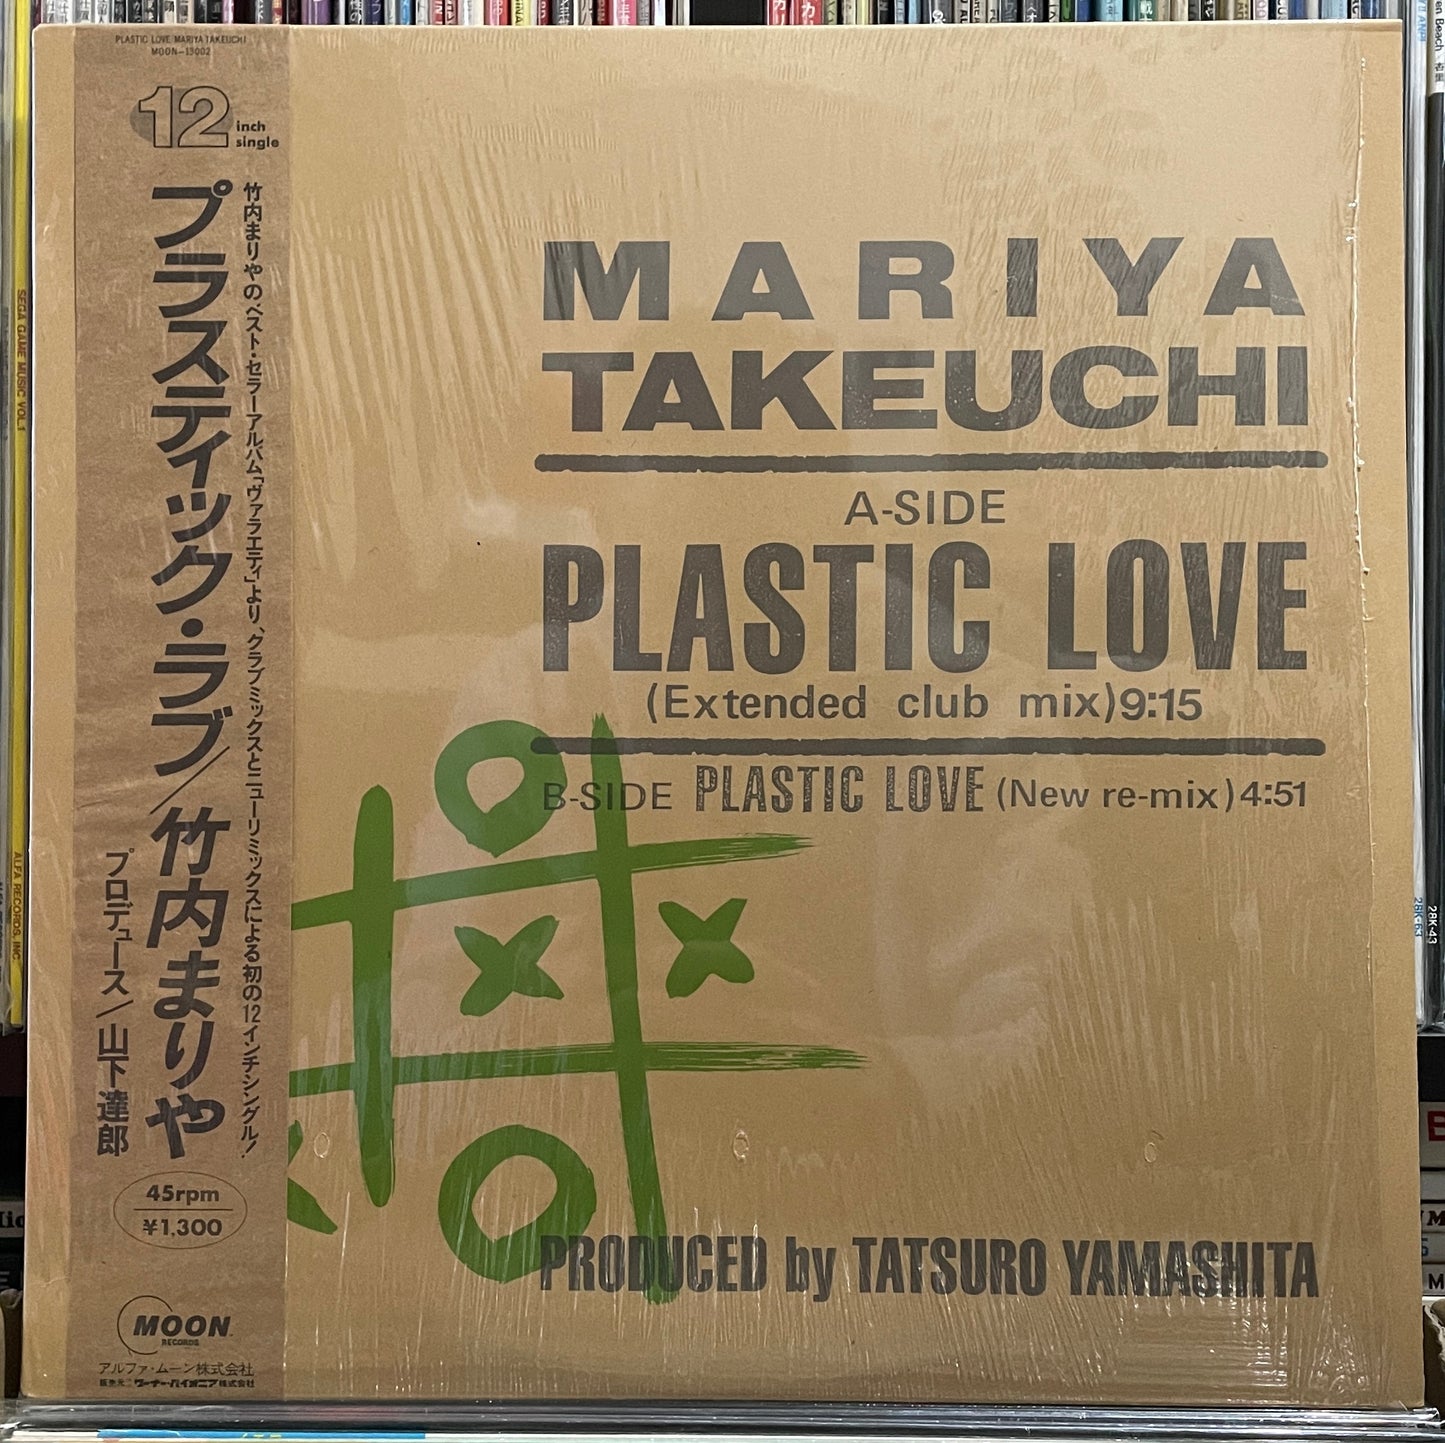 Mariya Takeuchi “Plastic Love” - Extended Club Mix 12” single (1985)